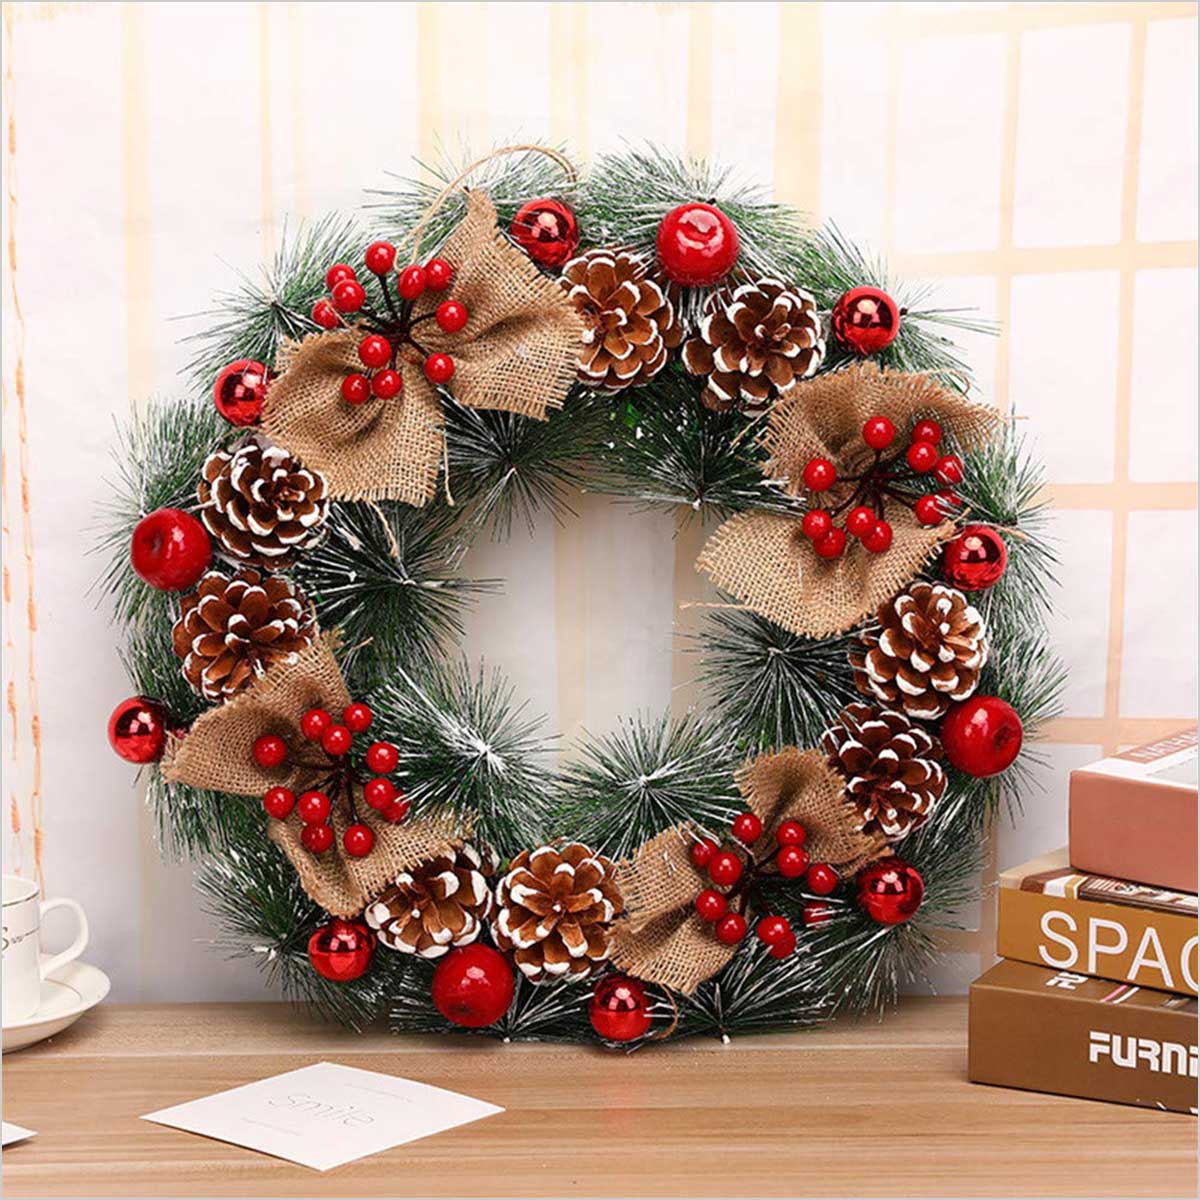 kekafu 30cm Christmas Wreath Plastic and Flannel Christmas Wreath with Bowknot Bells Balls and Berry Adornment,Fireplaces Window Front Door Decoration Ornaments. 